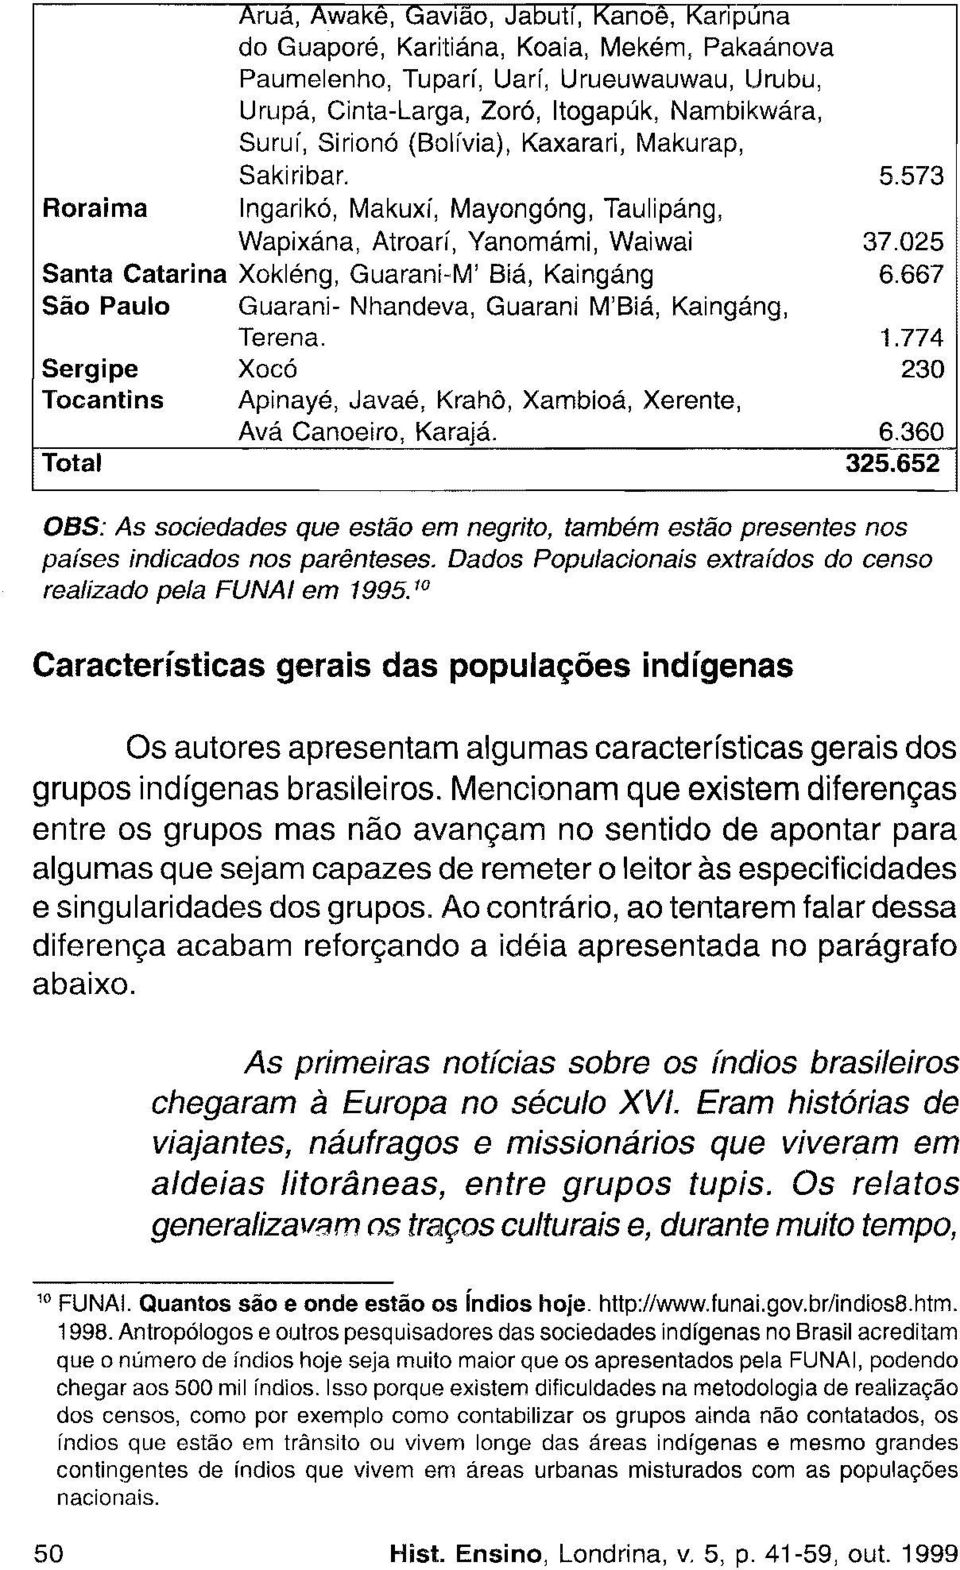 667 São Paulo Guarani- Nhandeva, Guarani M'Biá, Kaingáng, Terena. 1.774 Sergipe Xocó 230 Tocantins Apinayé, Javaé, Krahô, Xambioá, Xerente, Avá Canoeiro, Karajá. 6.360 Total 325.